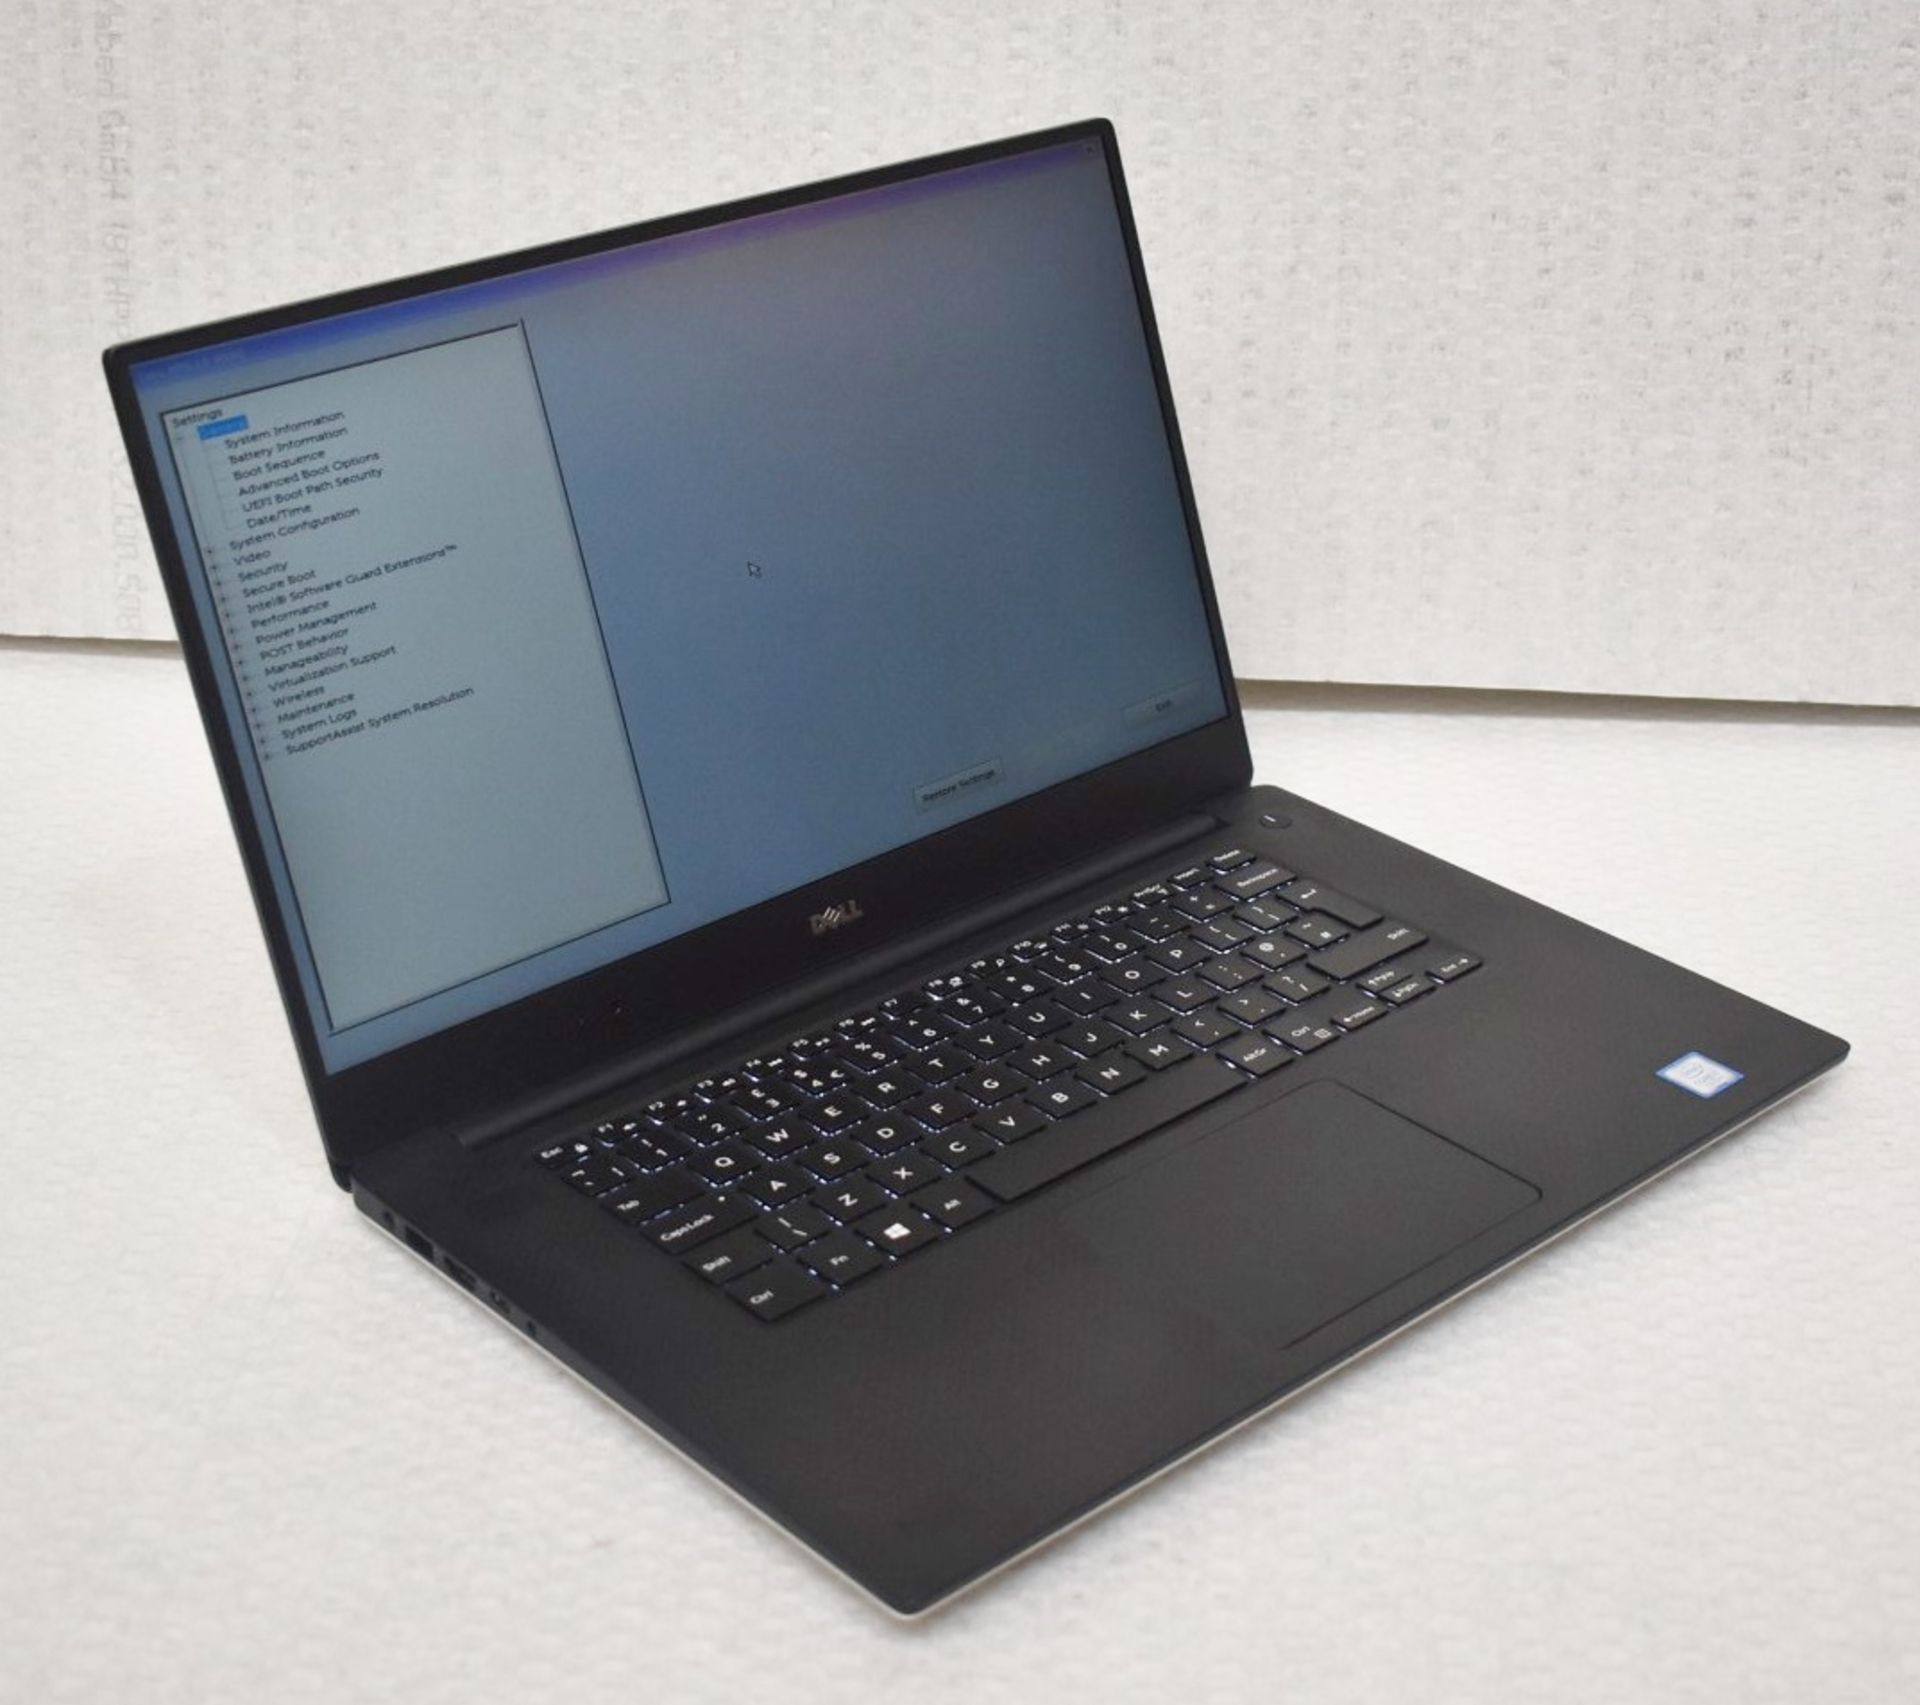 1 x Dell XPS 15 9570 15.6" Full HD Laptop Featuring an Intel i7-7700hq 3.8ghz Quad Core Processor,